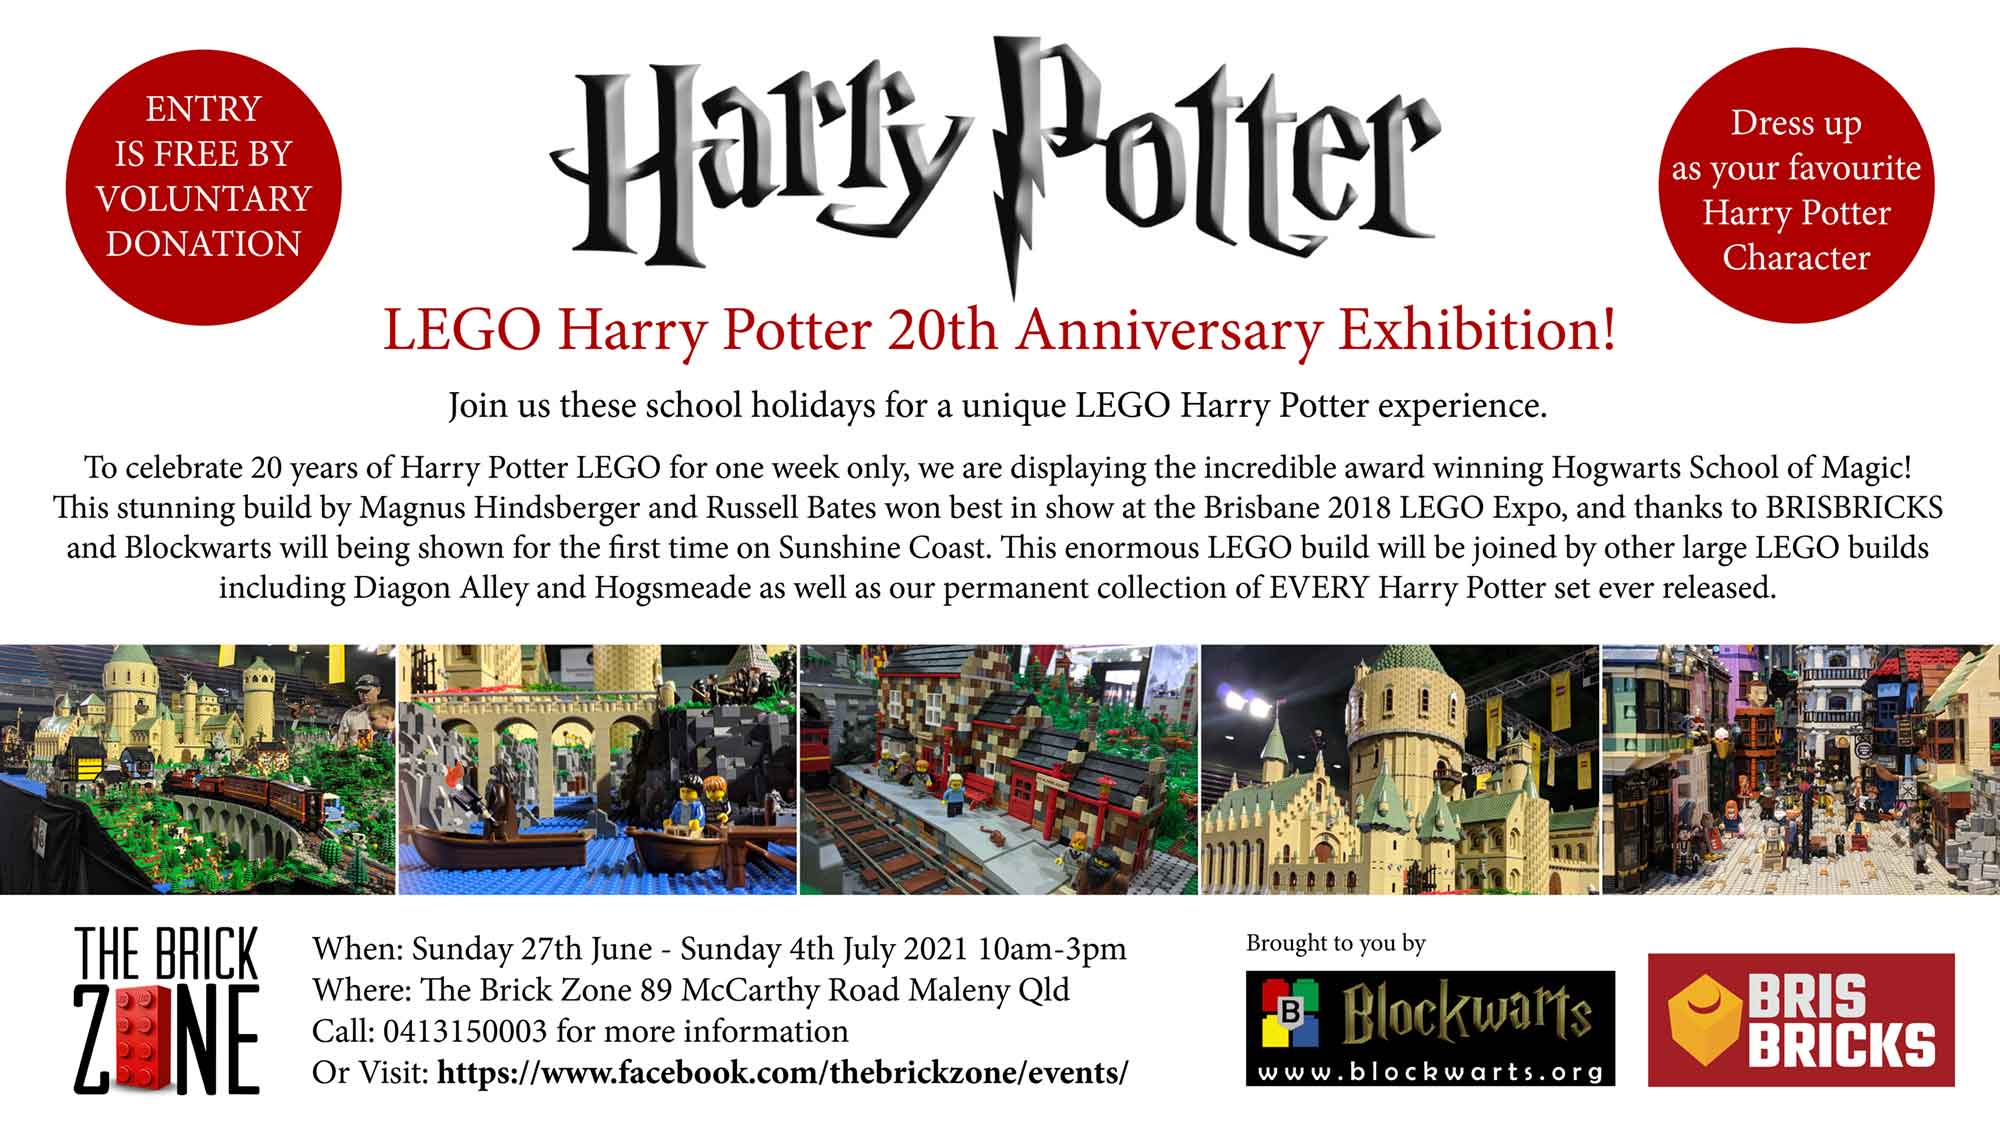 LEGO Harry Potter 20th Anniversary Exhibition!